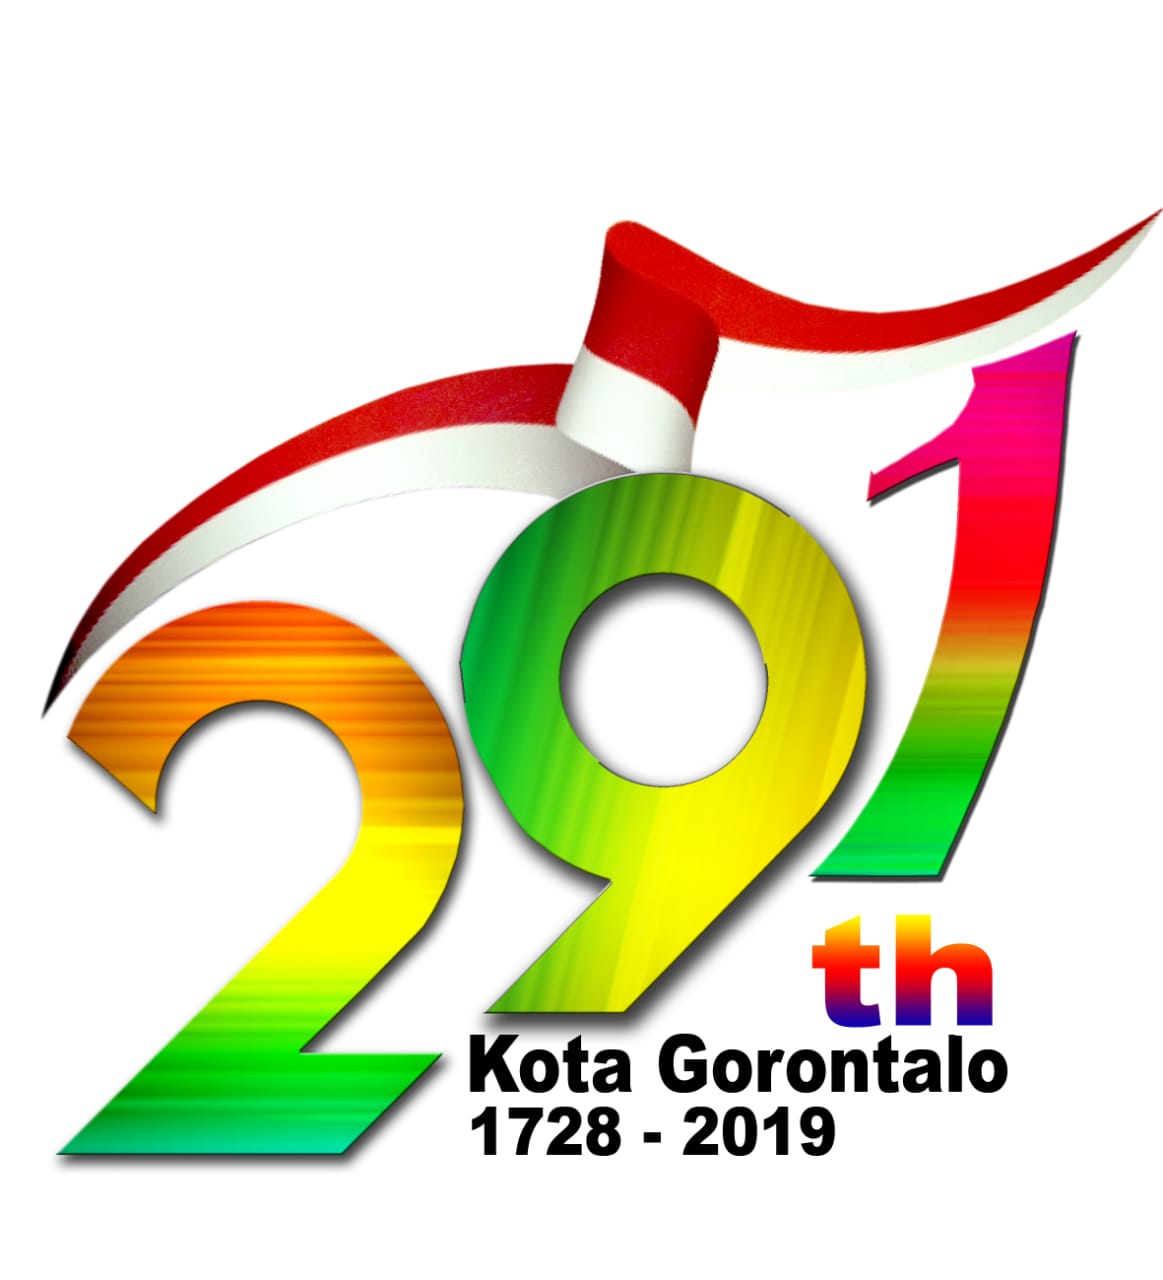 Usia ke 291, Banyak Yang Berkembang di Kota Gorontalo